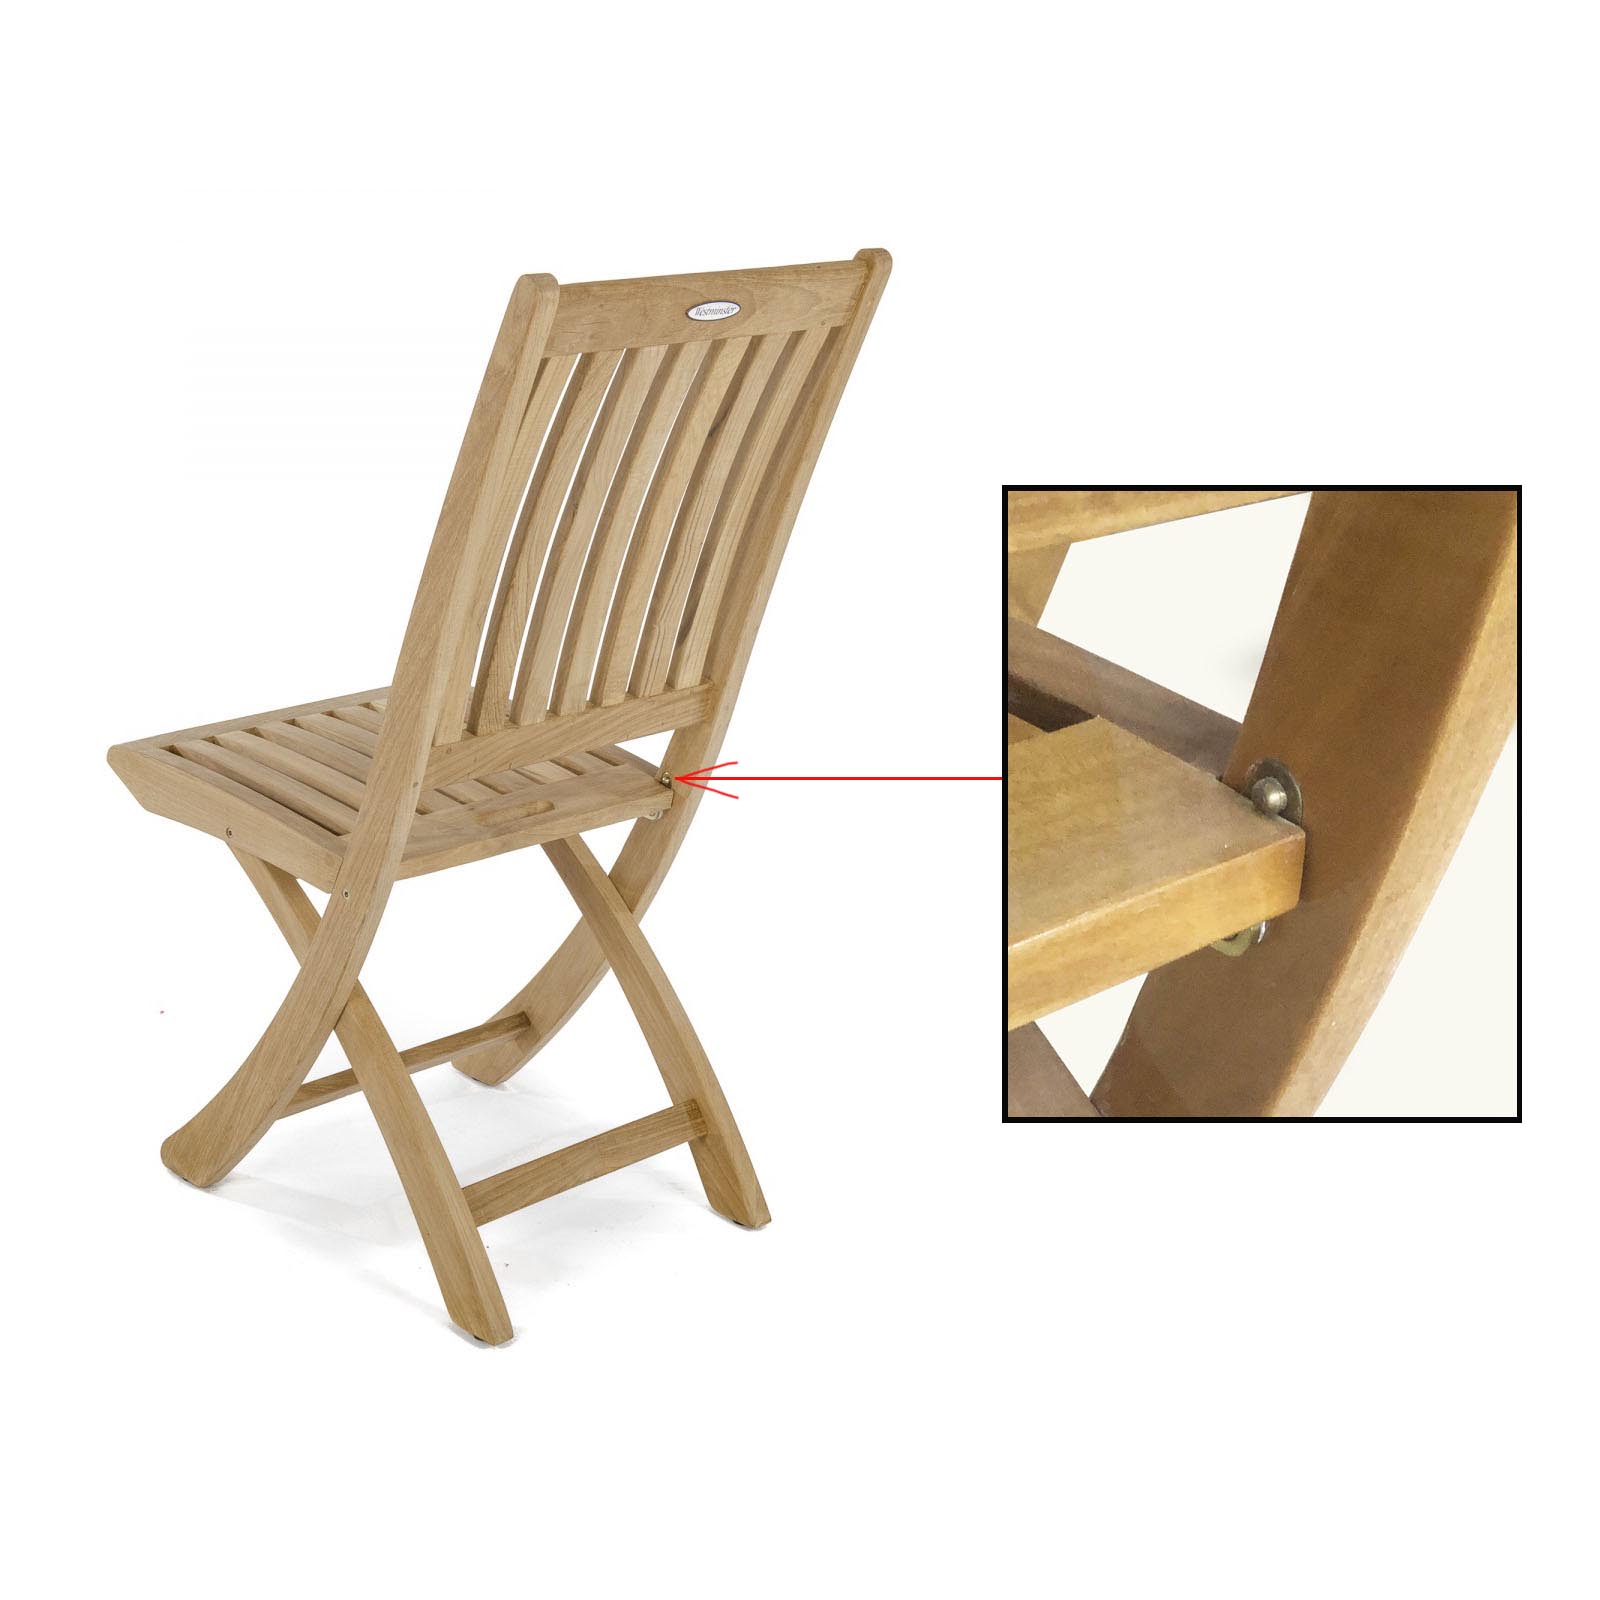 Folding Chair Release Latch Mechanism